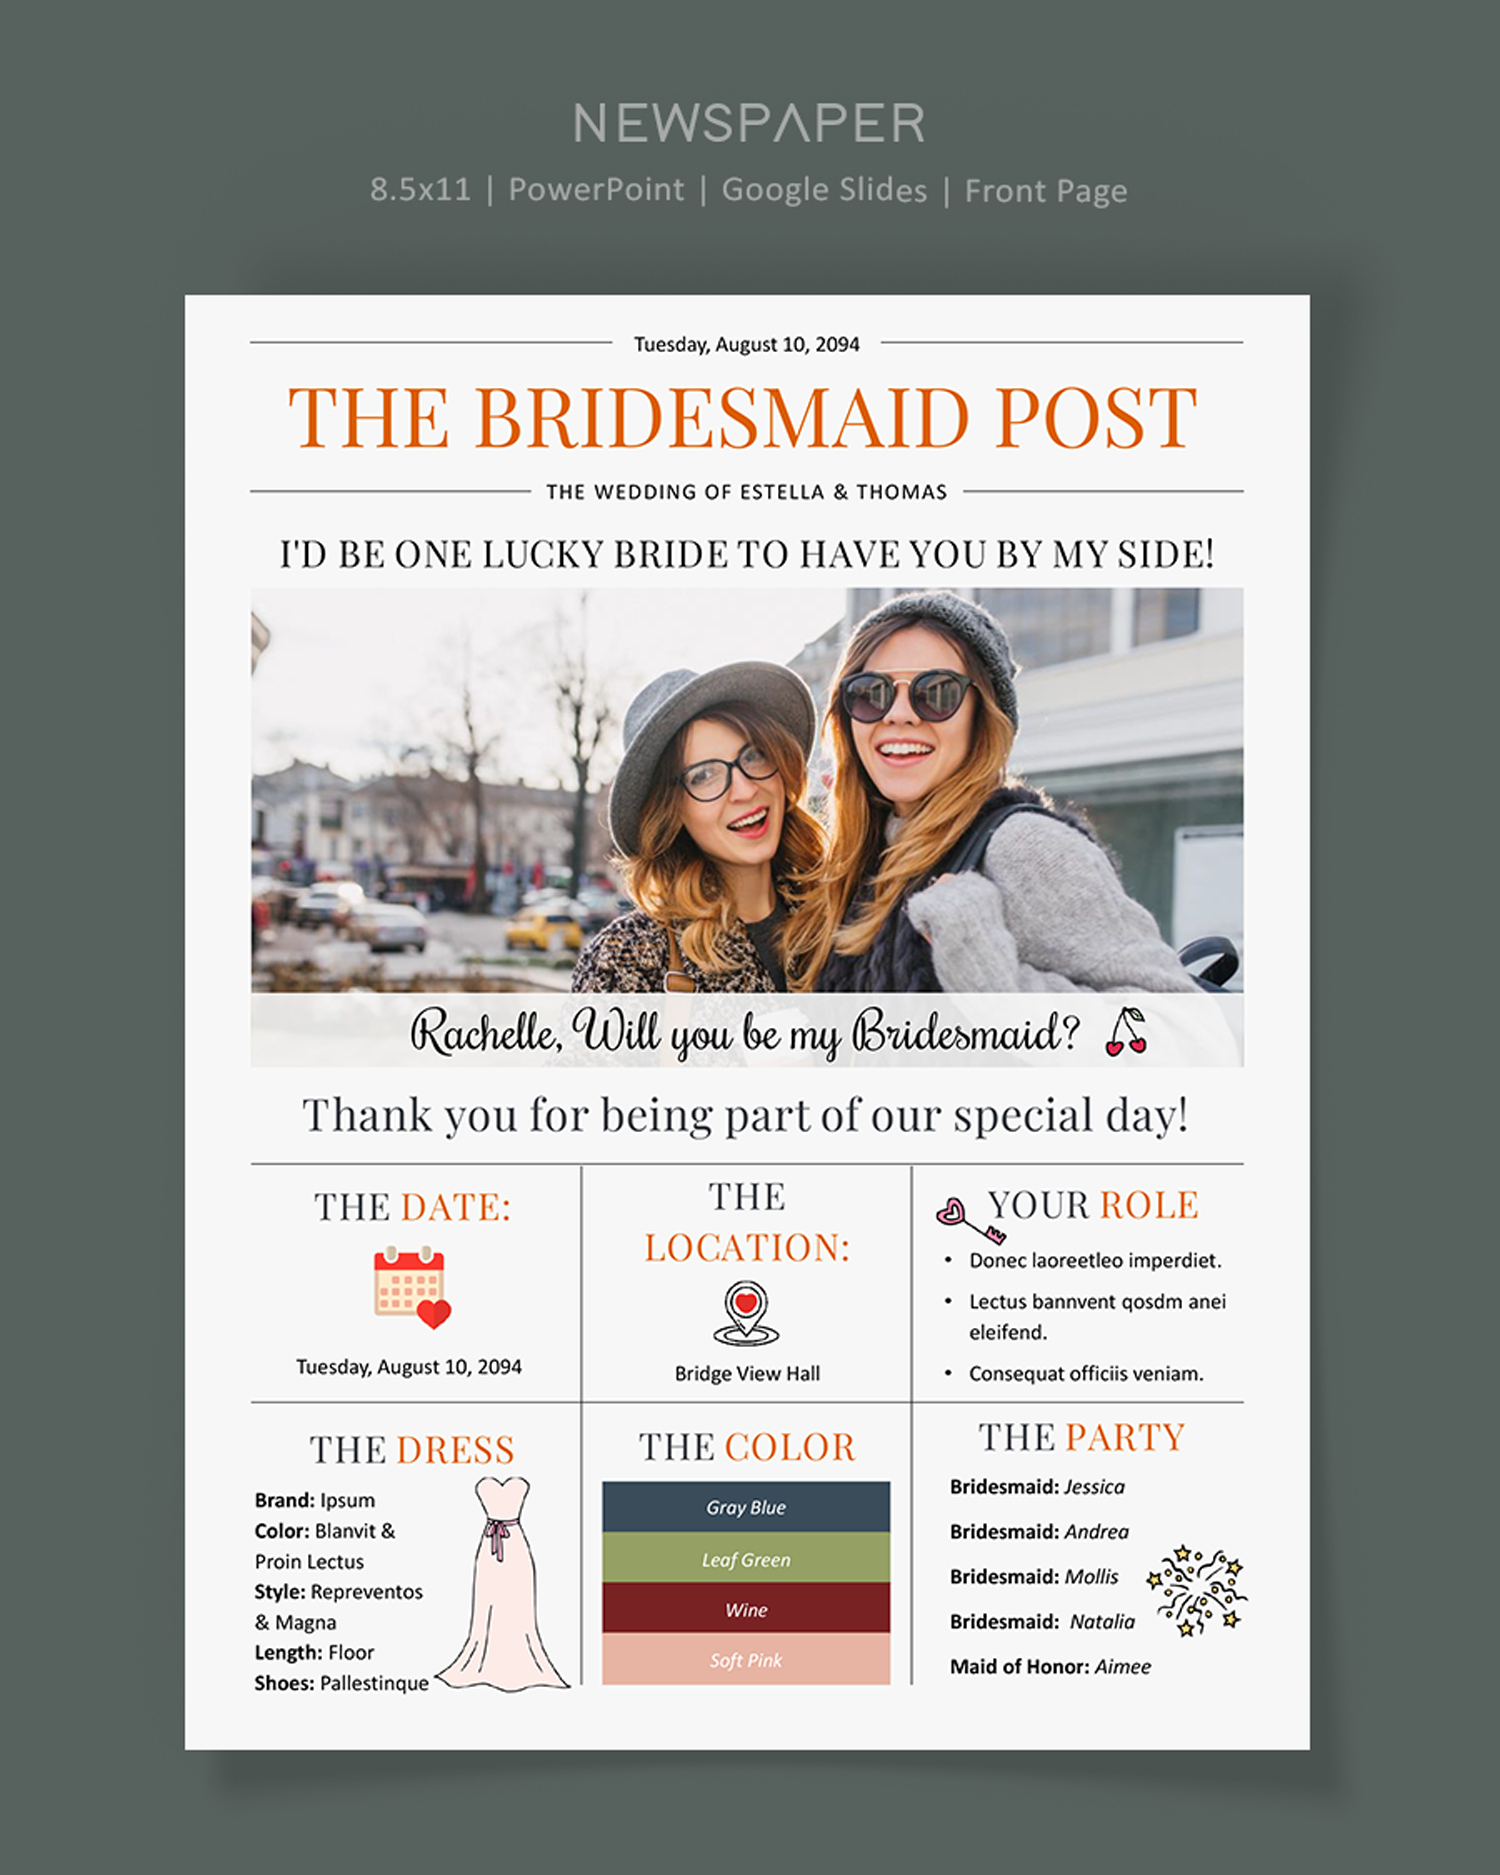 Bridesmaid Card Proposal Newspaper Template - PowerPoint, Google Slides